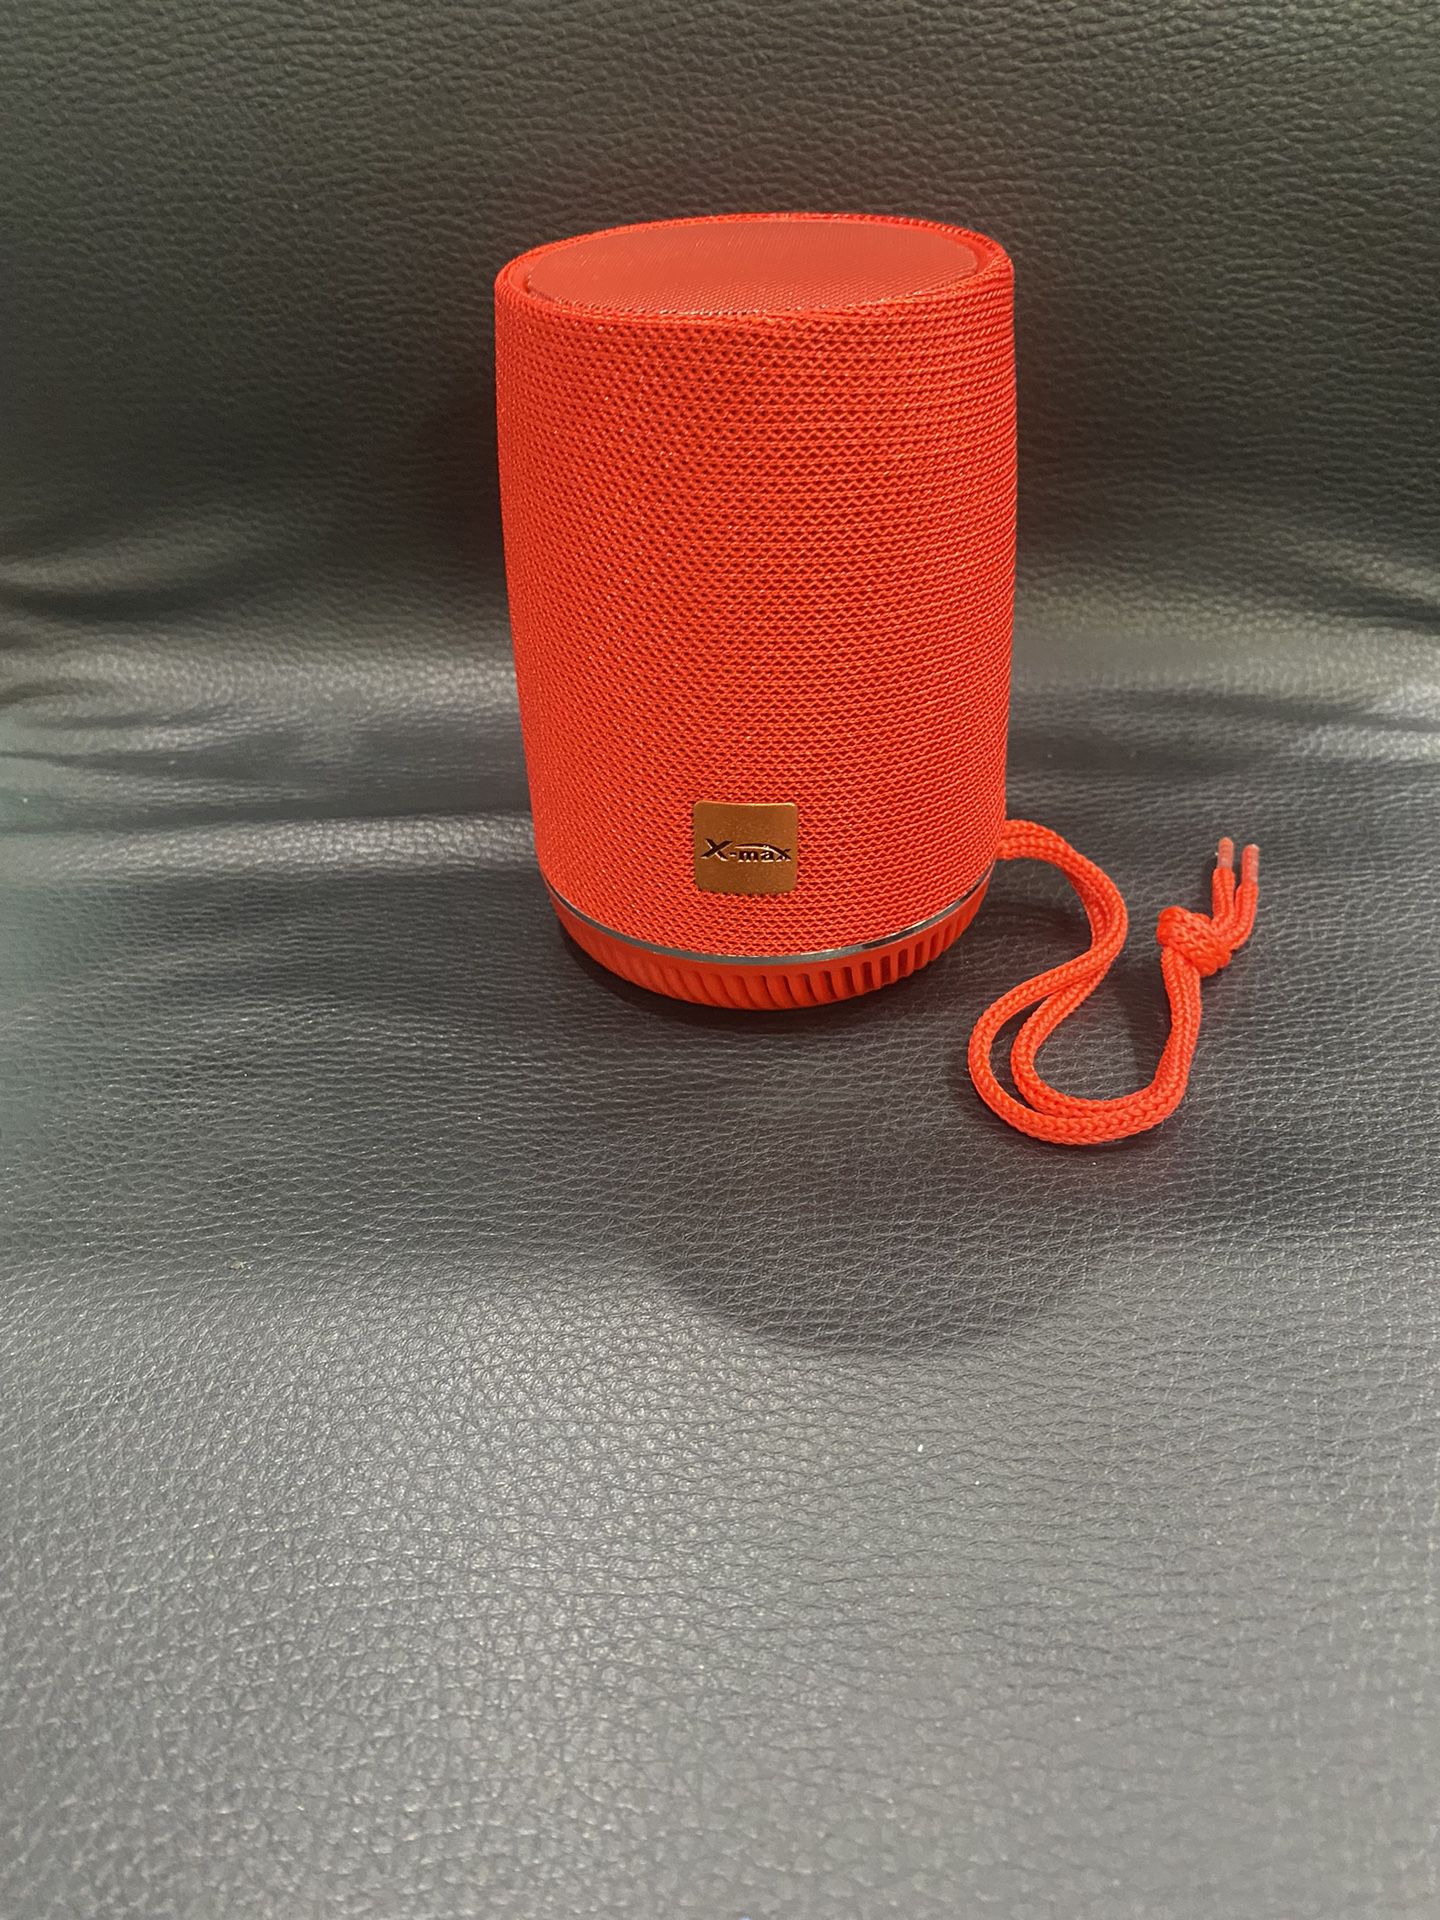 Red Portable Bluetooth Speaker 